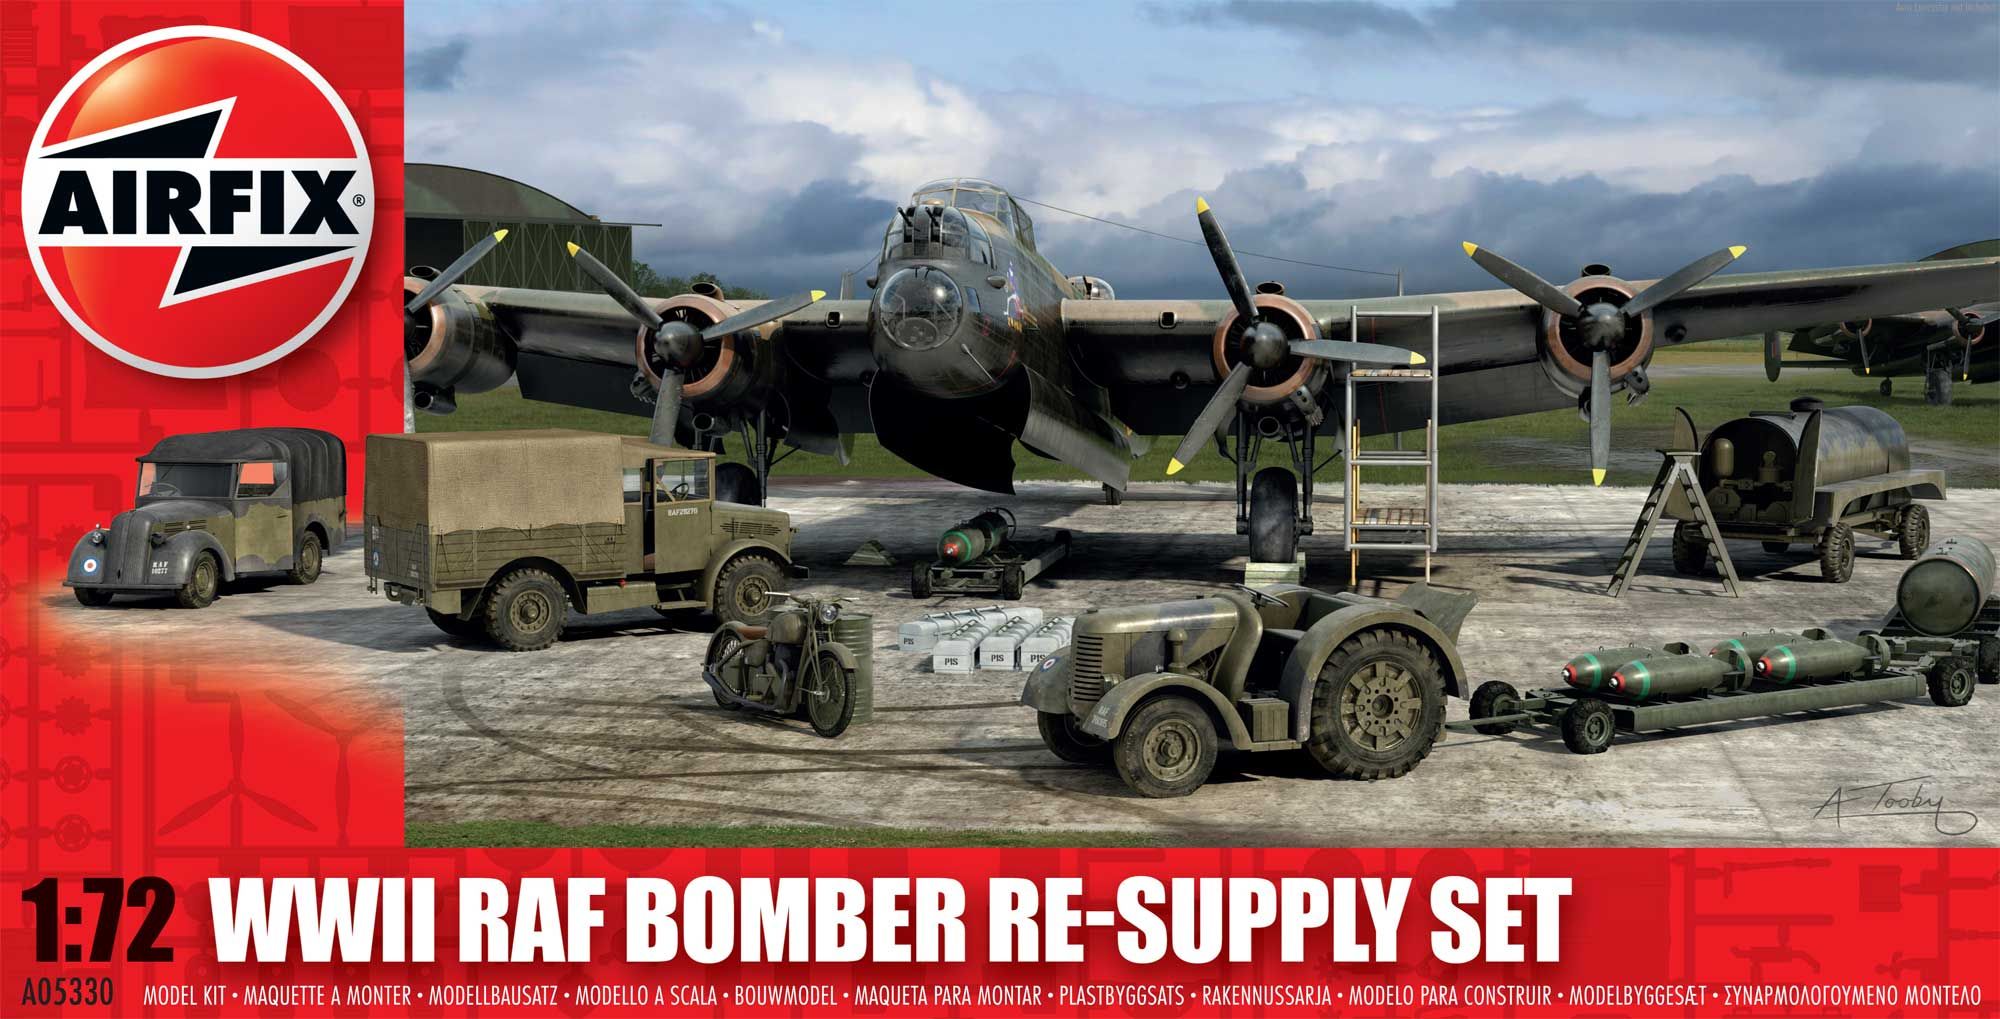 1/72 WWII RAF BOMBER RE-SUPPLY SET AIRFIX